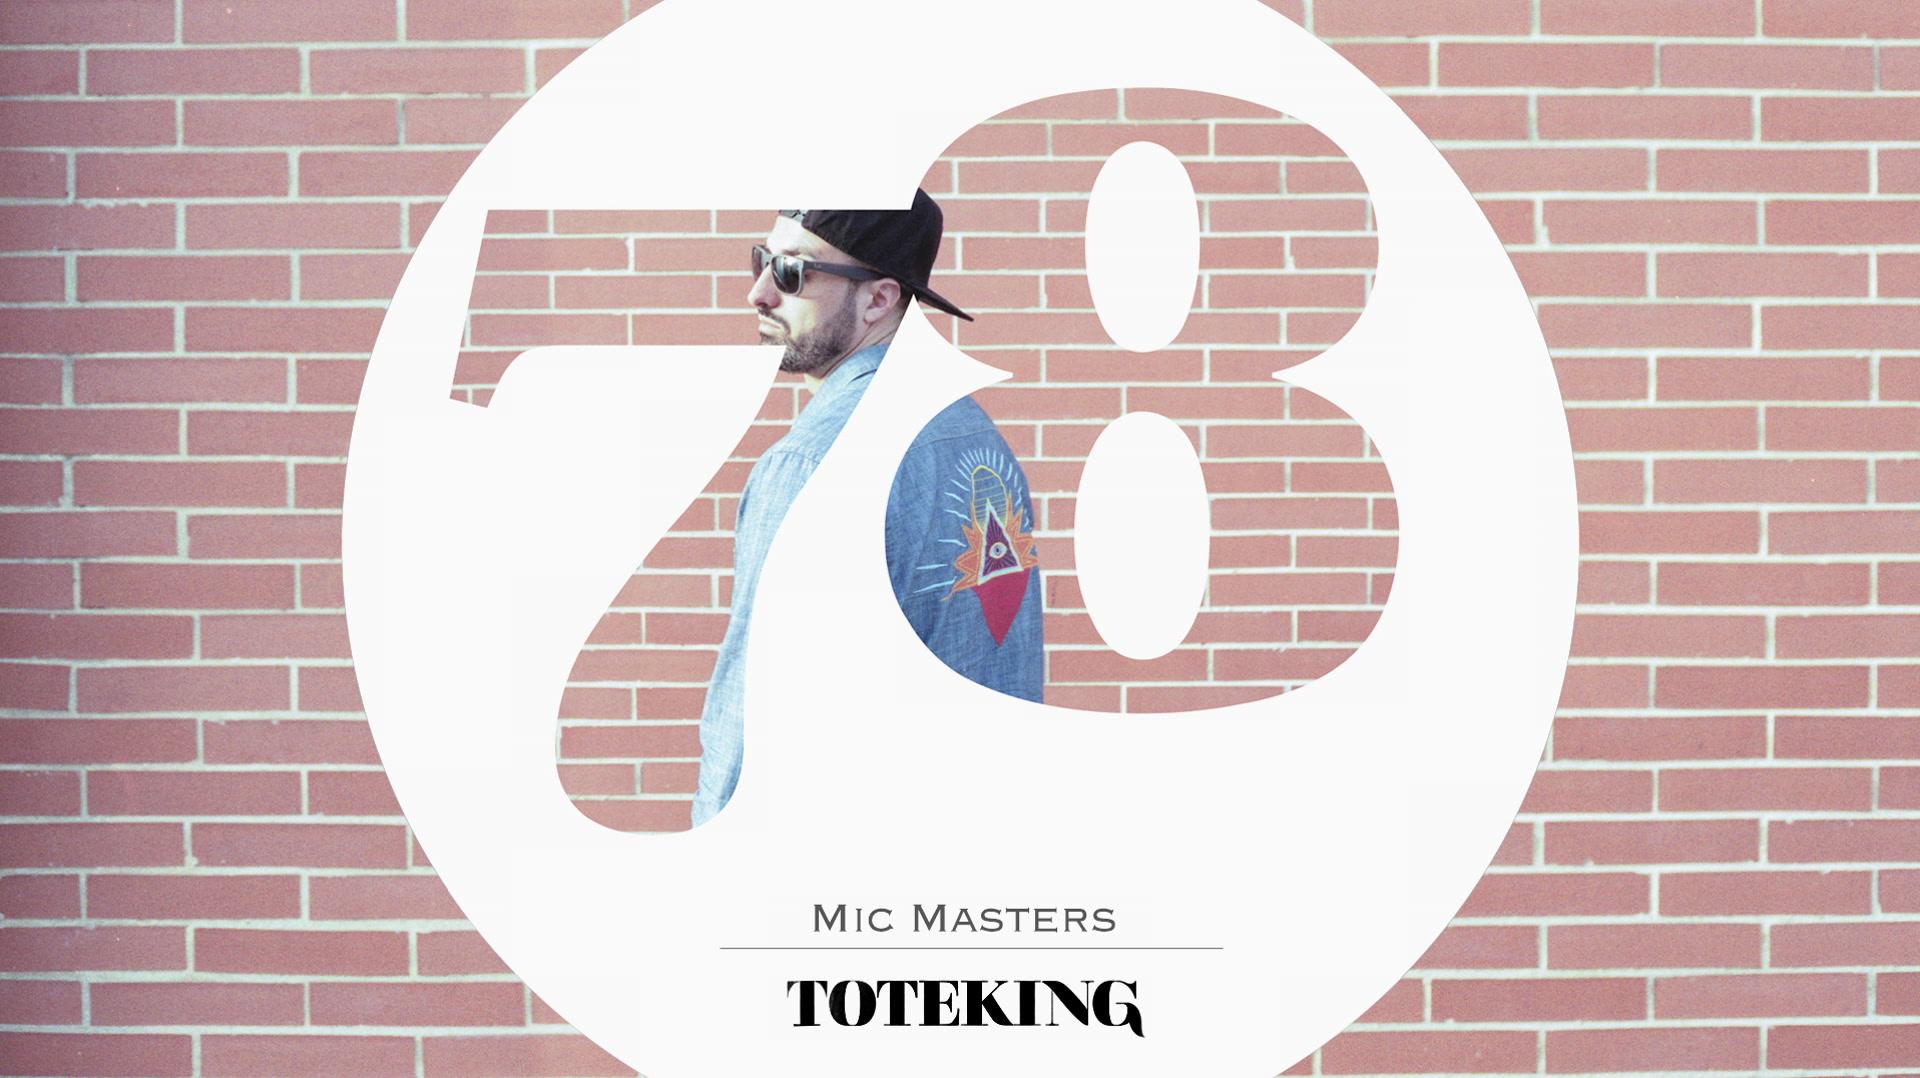 ToteKing - Mic Masters (Audio)